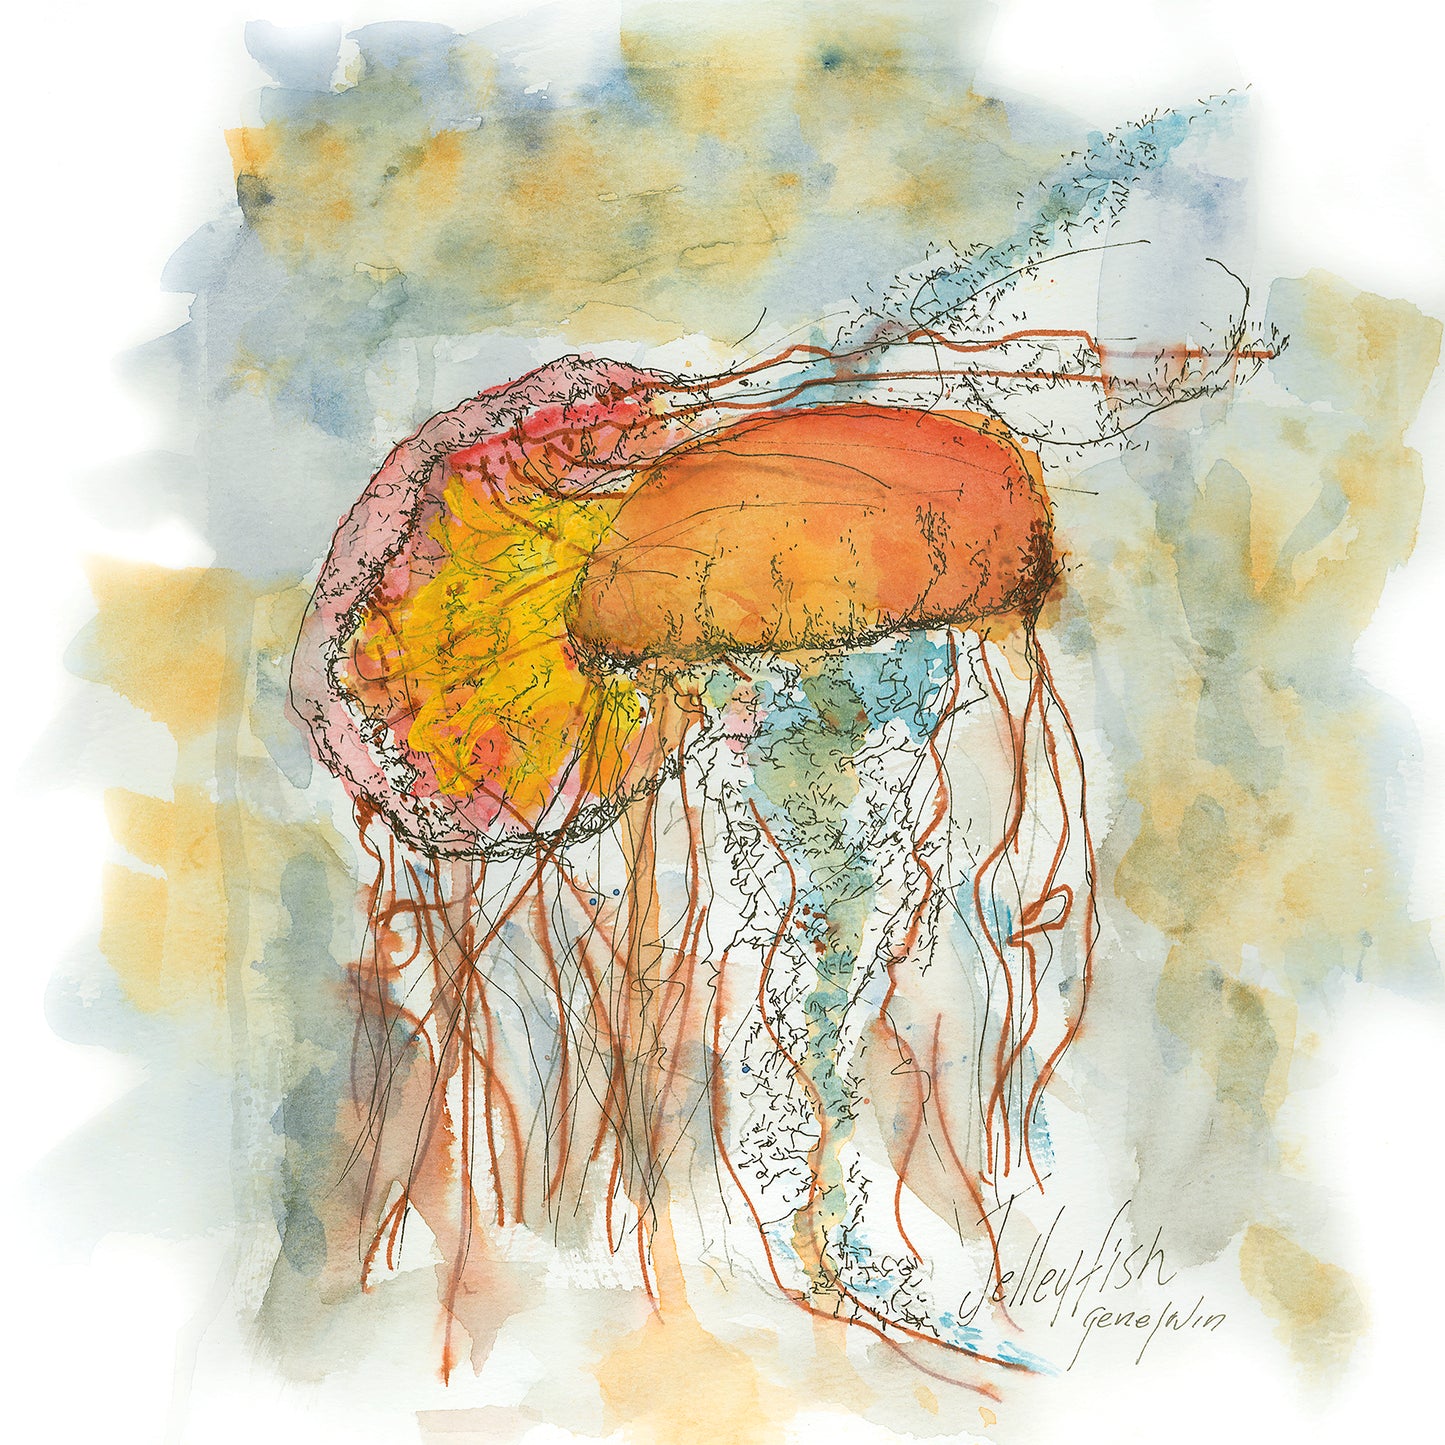 Jellyfish - Gene's Pen & Ink